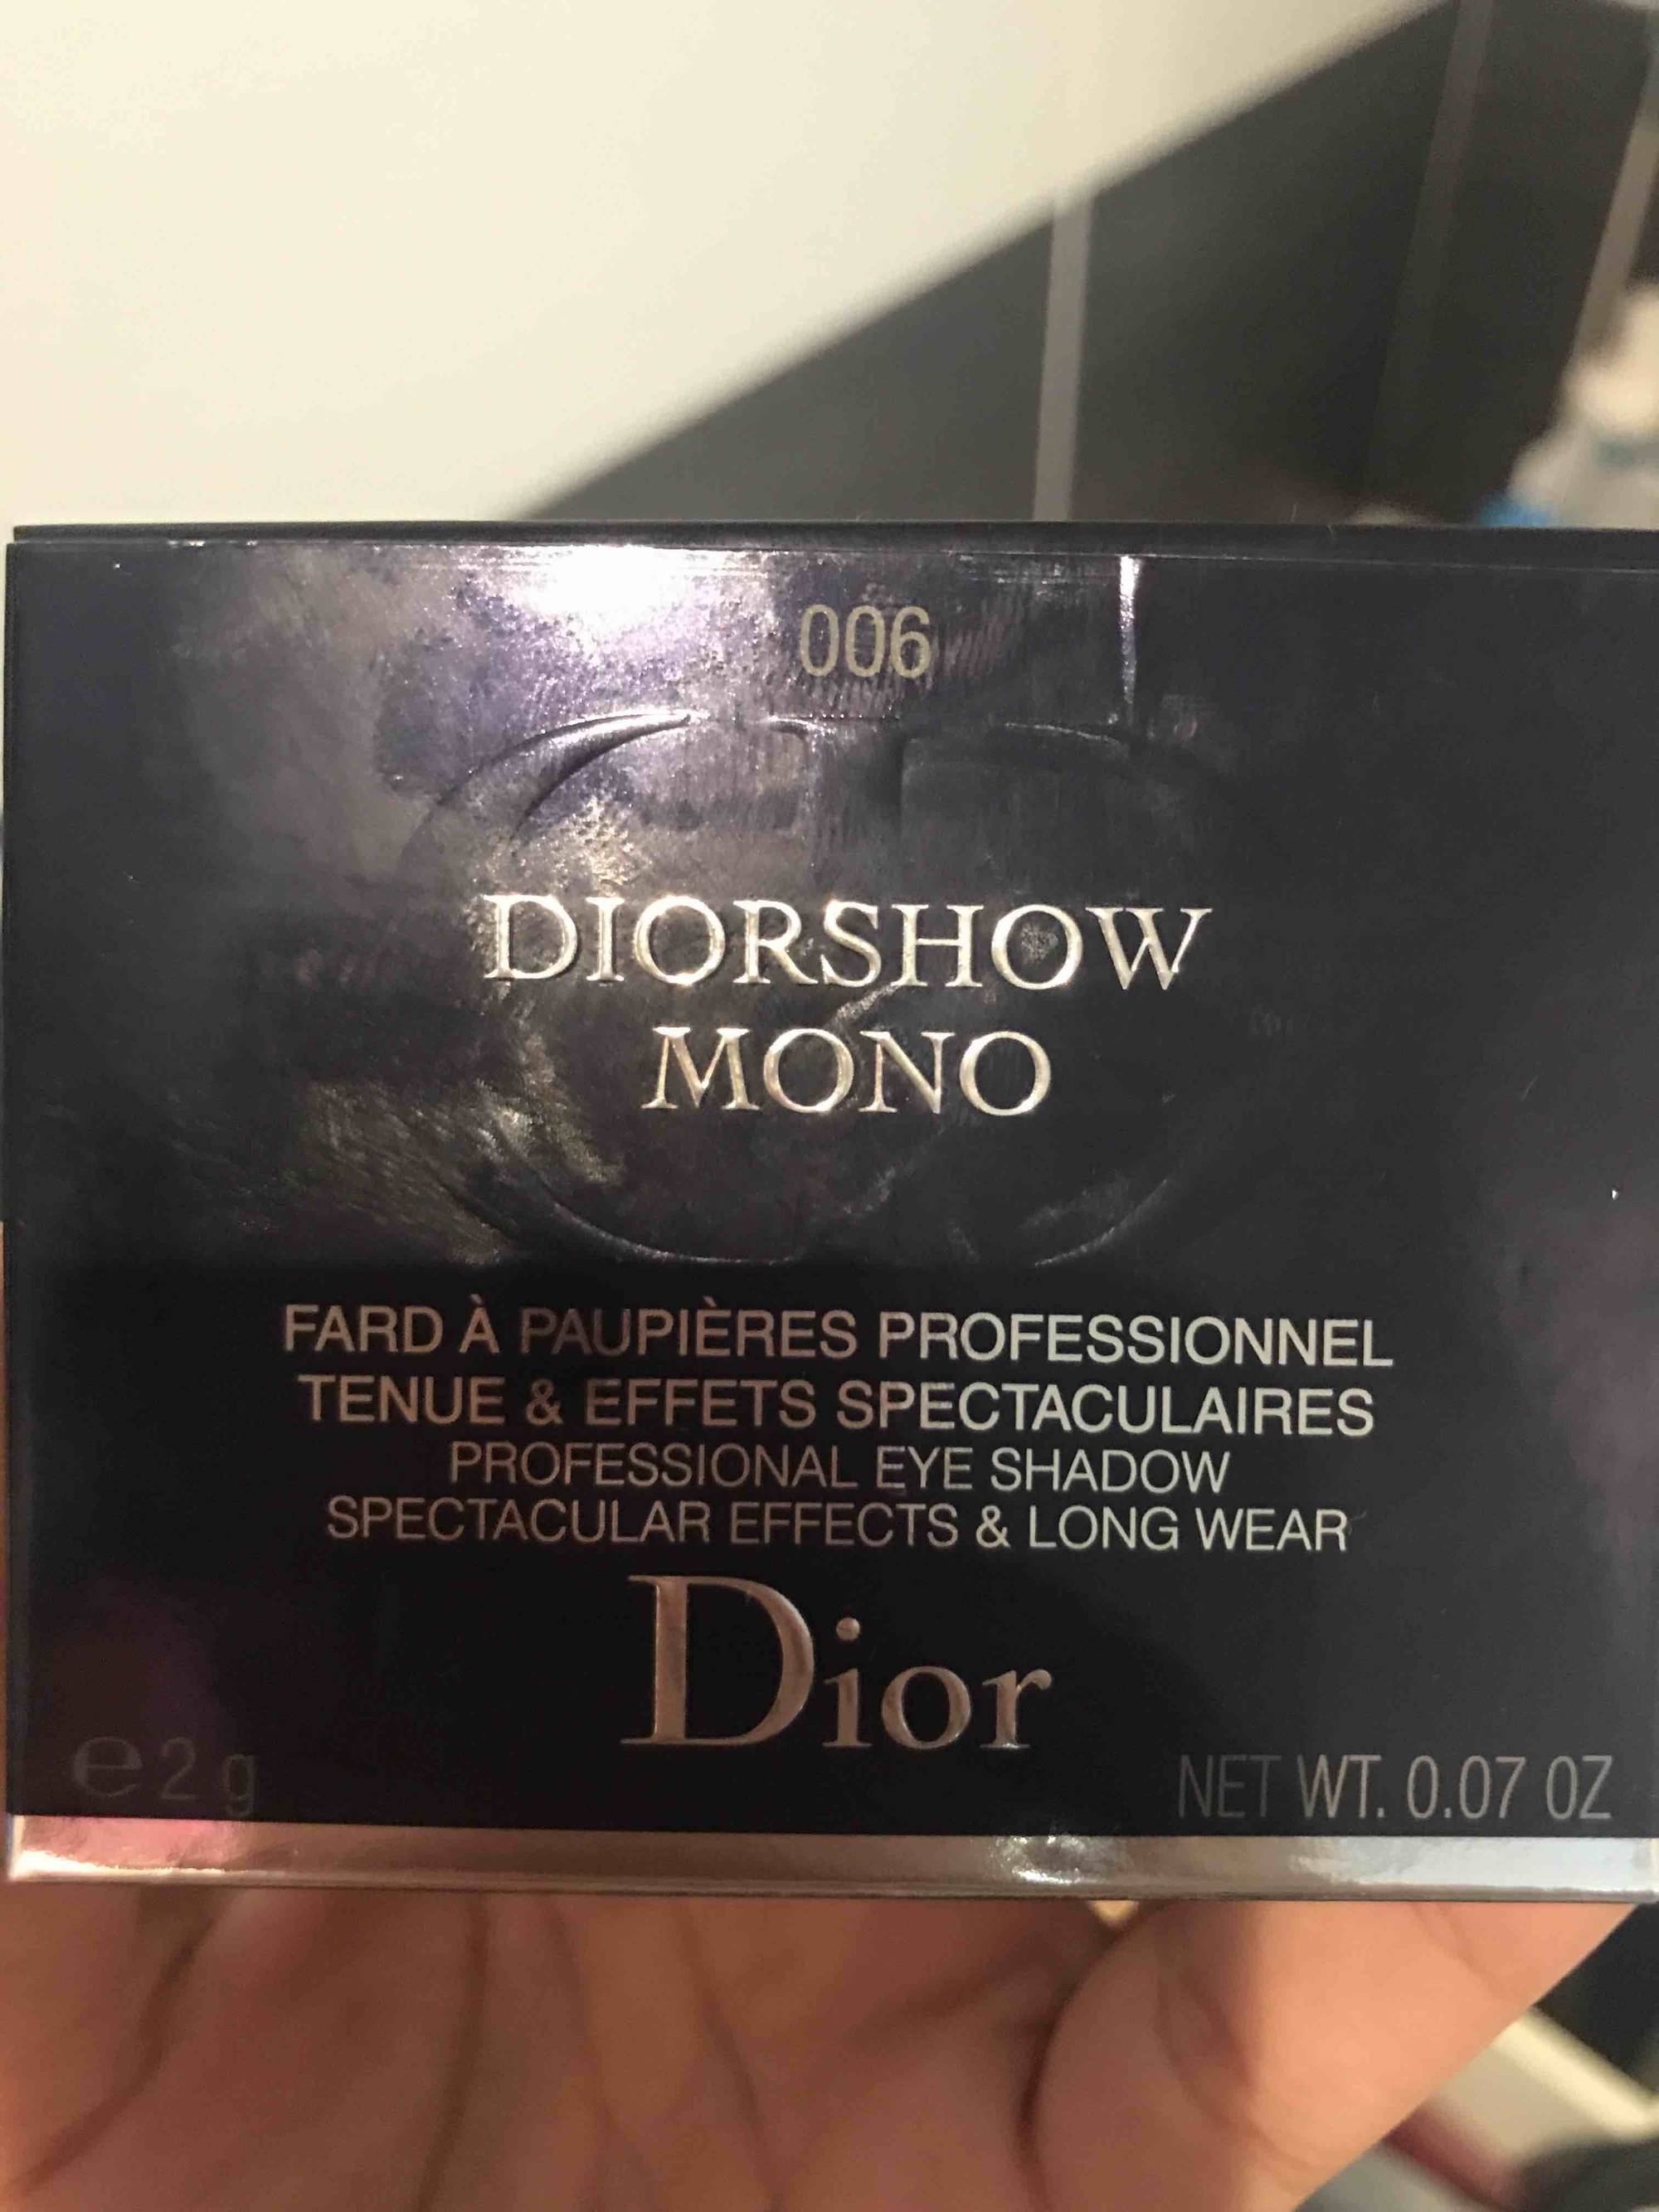 DIOR - Diorshow mono - Fard à paupière professionnel